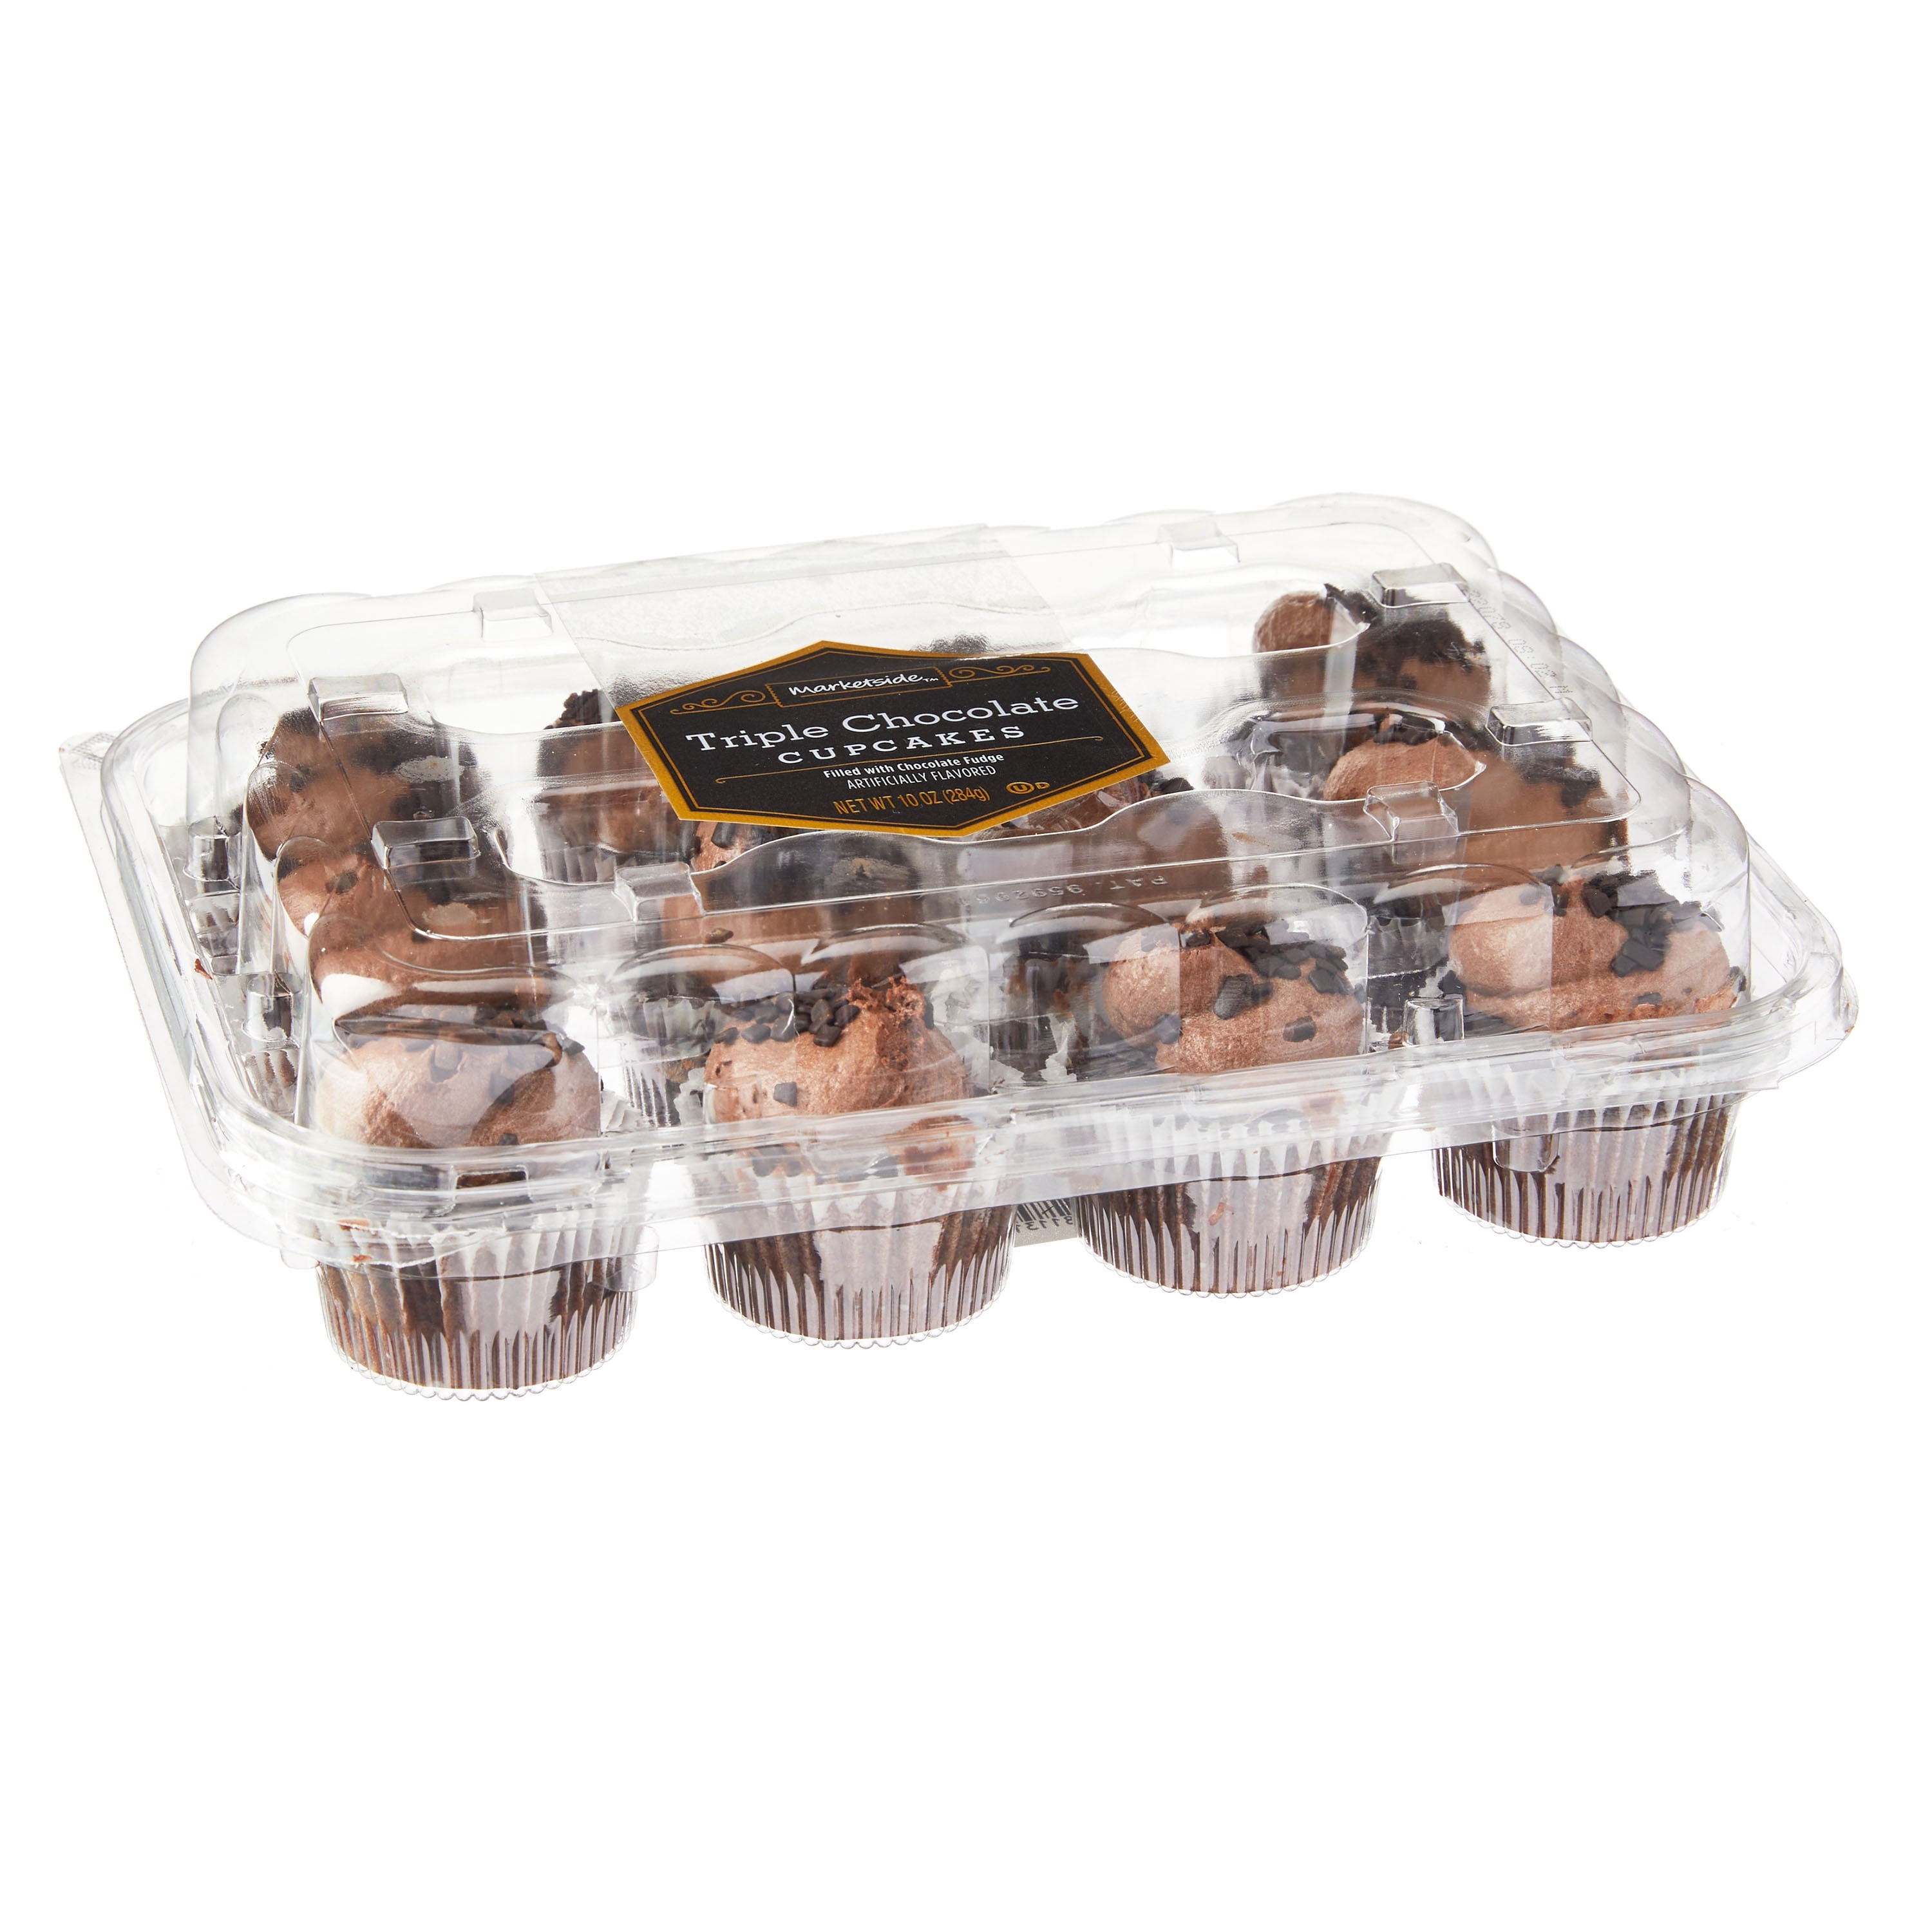 Marketside Triple Chocolate Mini Cupcakes, 10 oz, 12 Count 